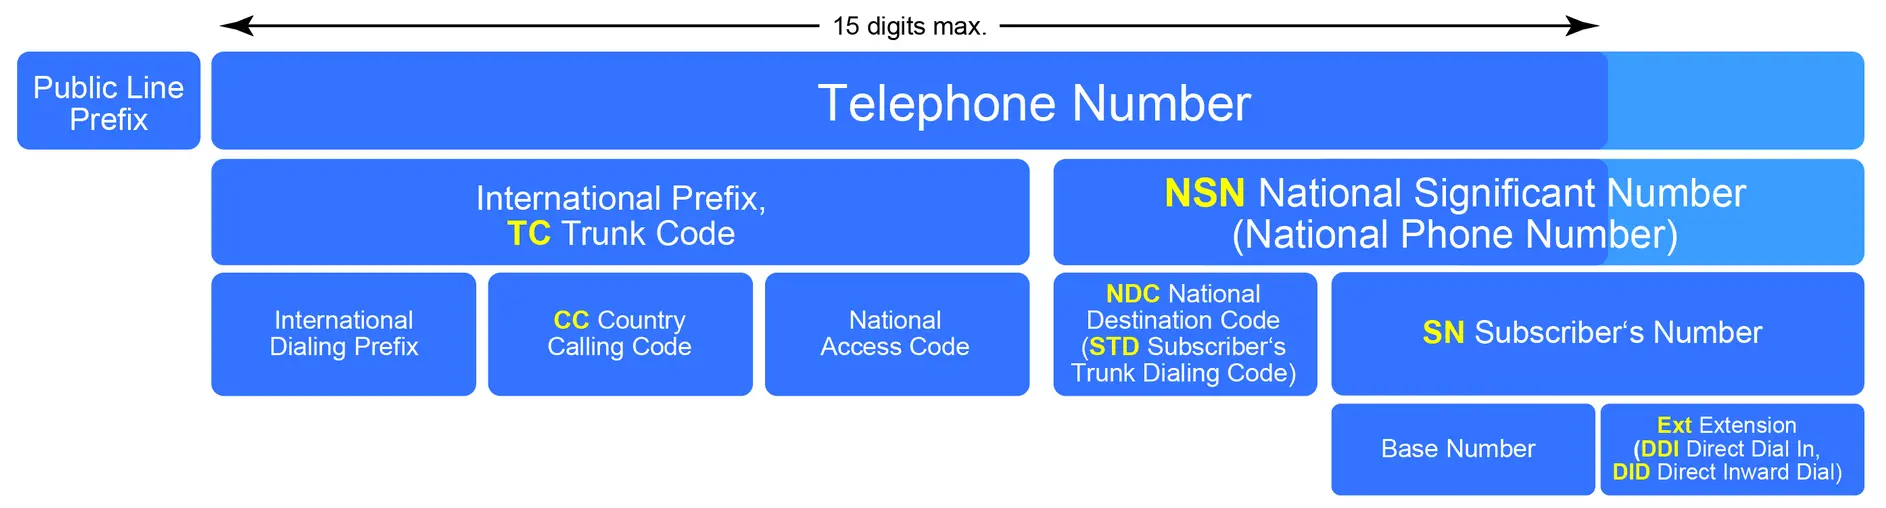 Telephone numbering plan